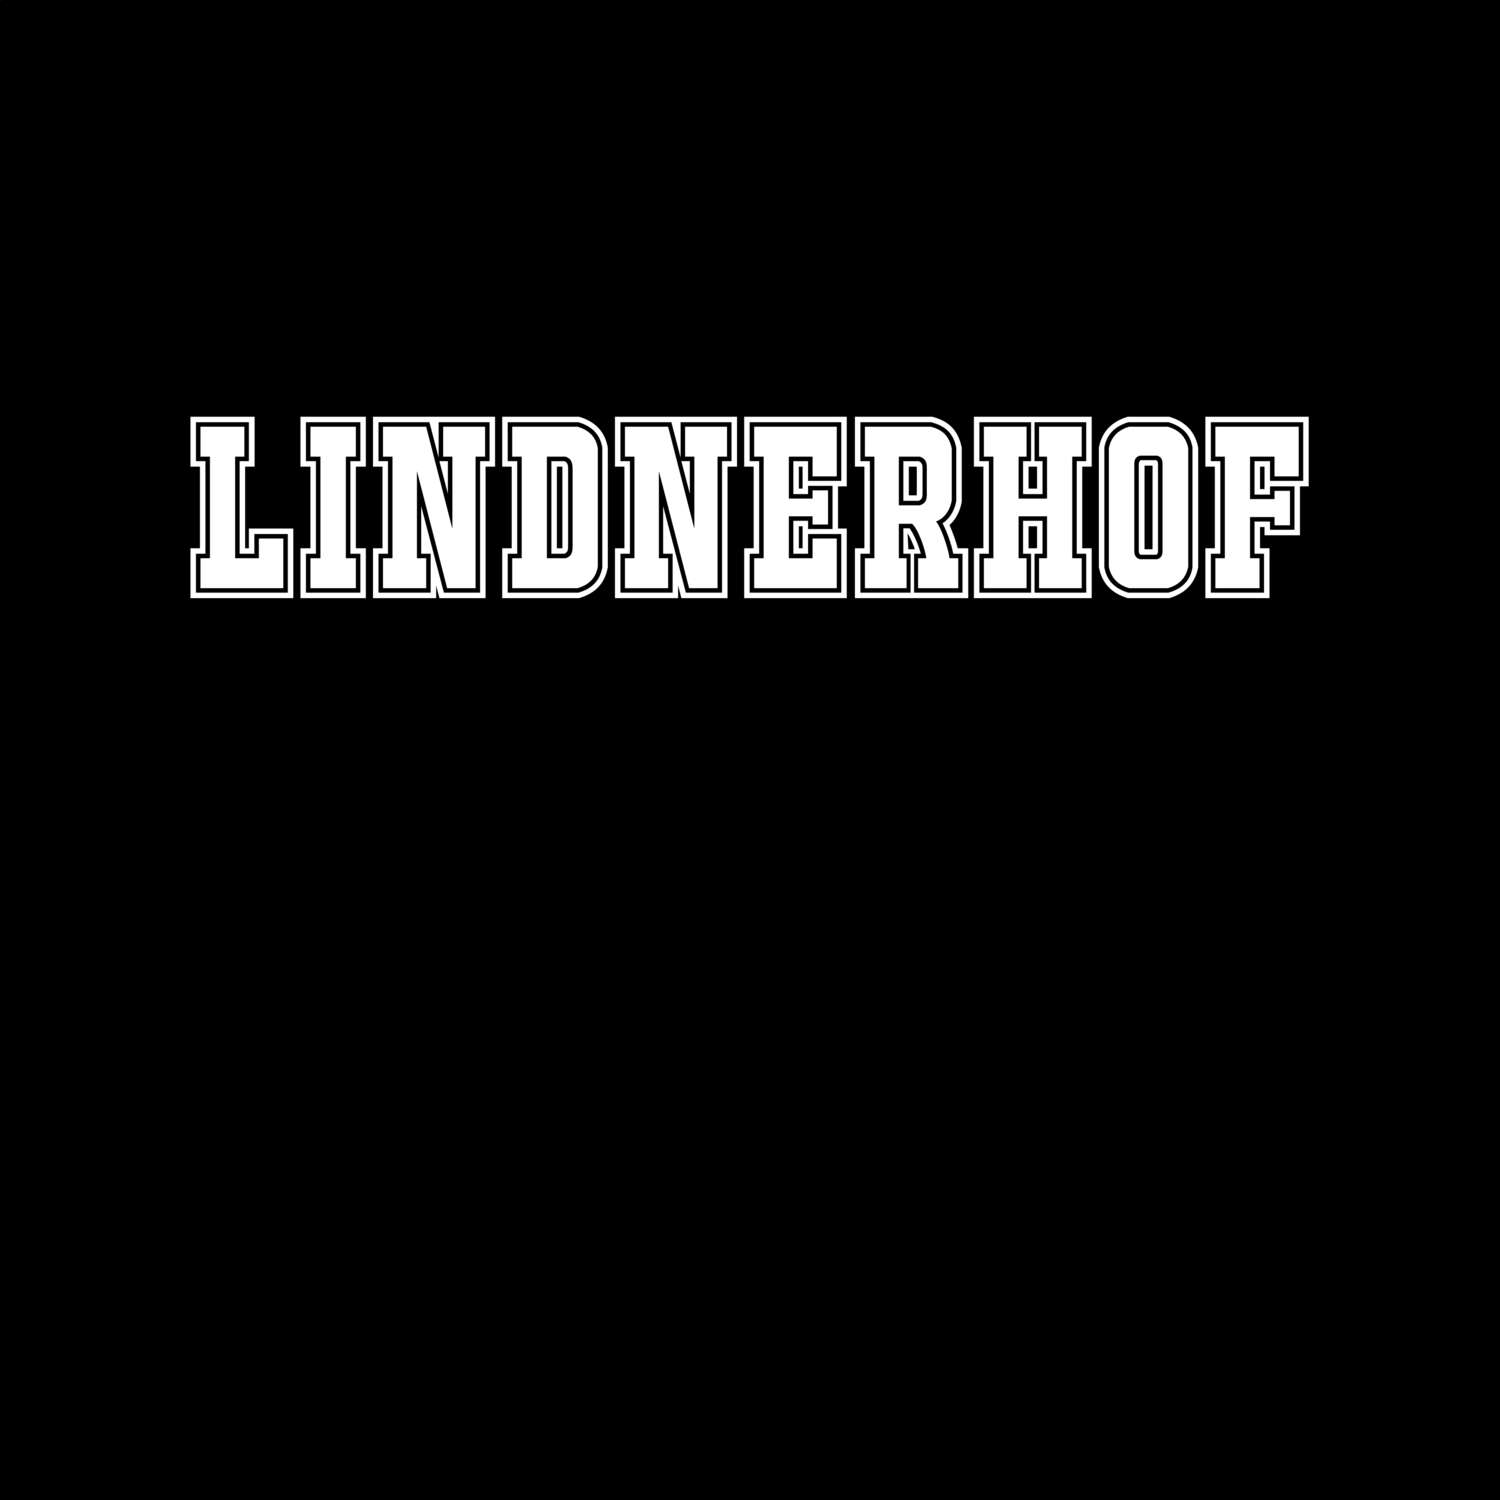 Lindnerhof T-Shirt »Classic«